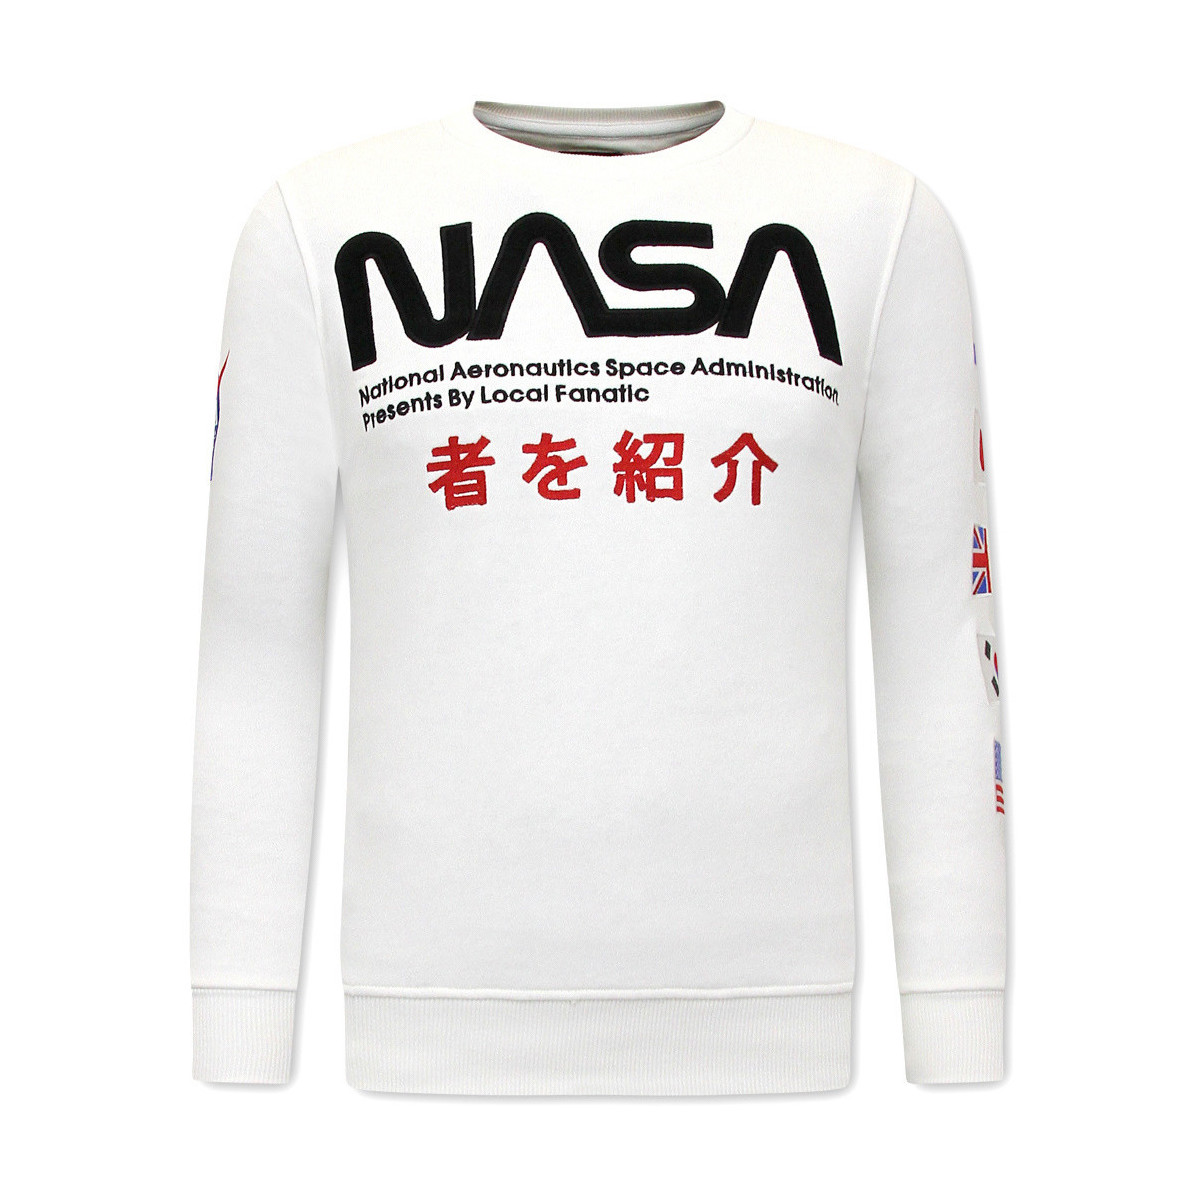 Textiel Heren Sweaters / Sweatshirts Local Fanatic NASA International Wit